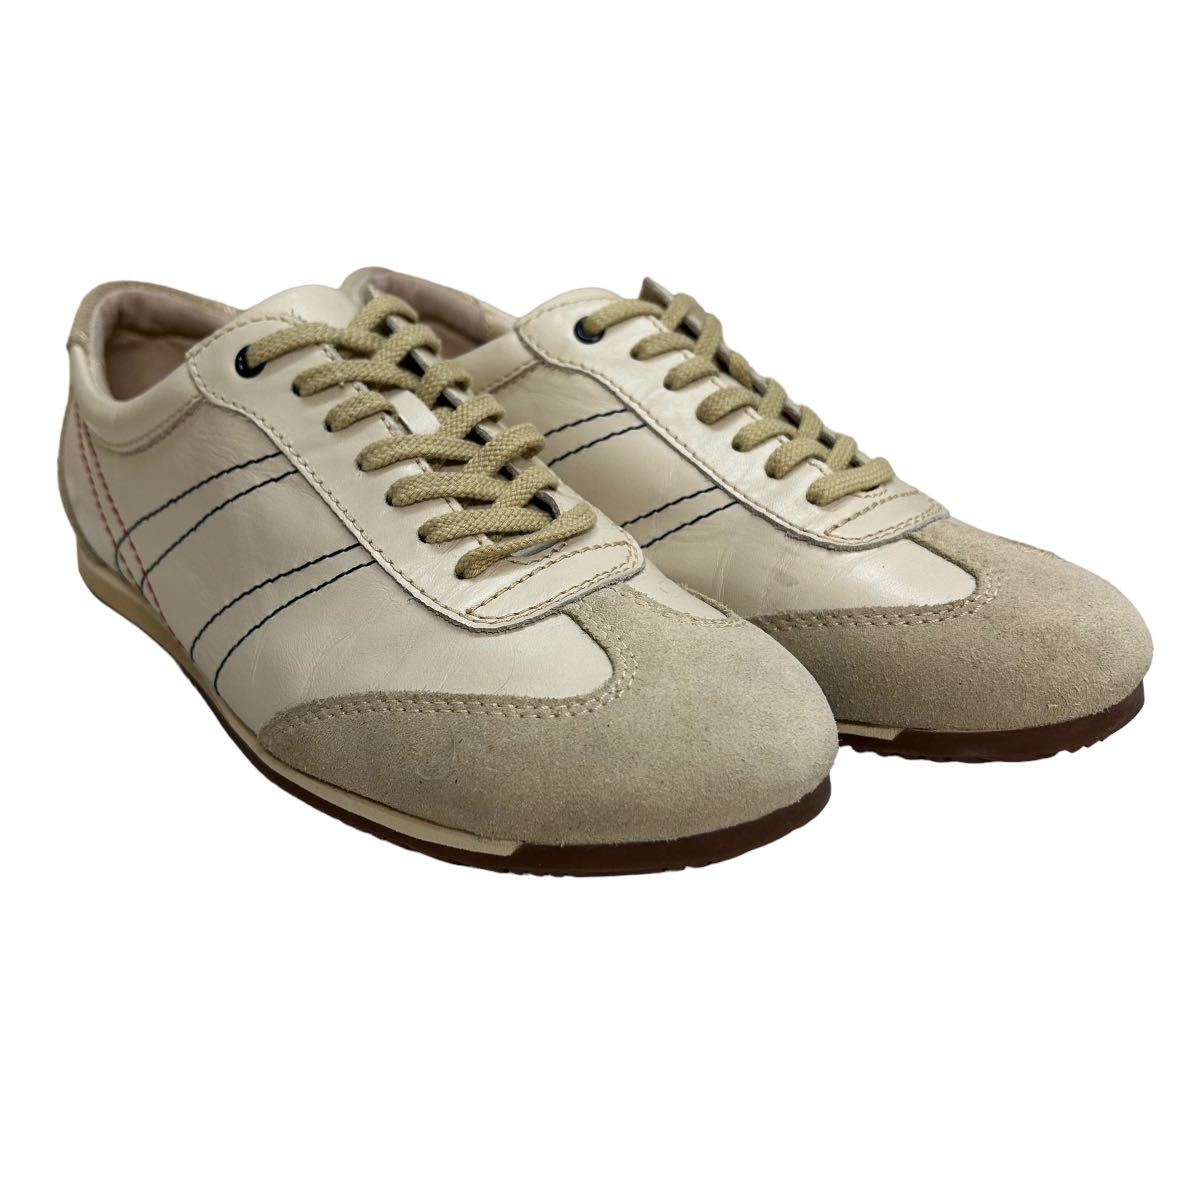 BC502 REGAL Reagal lady's walking shoes sneakers 25cm ivory beige 